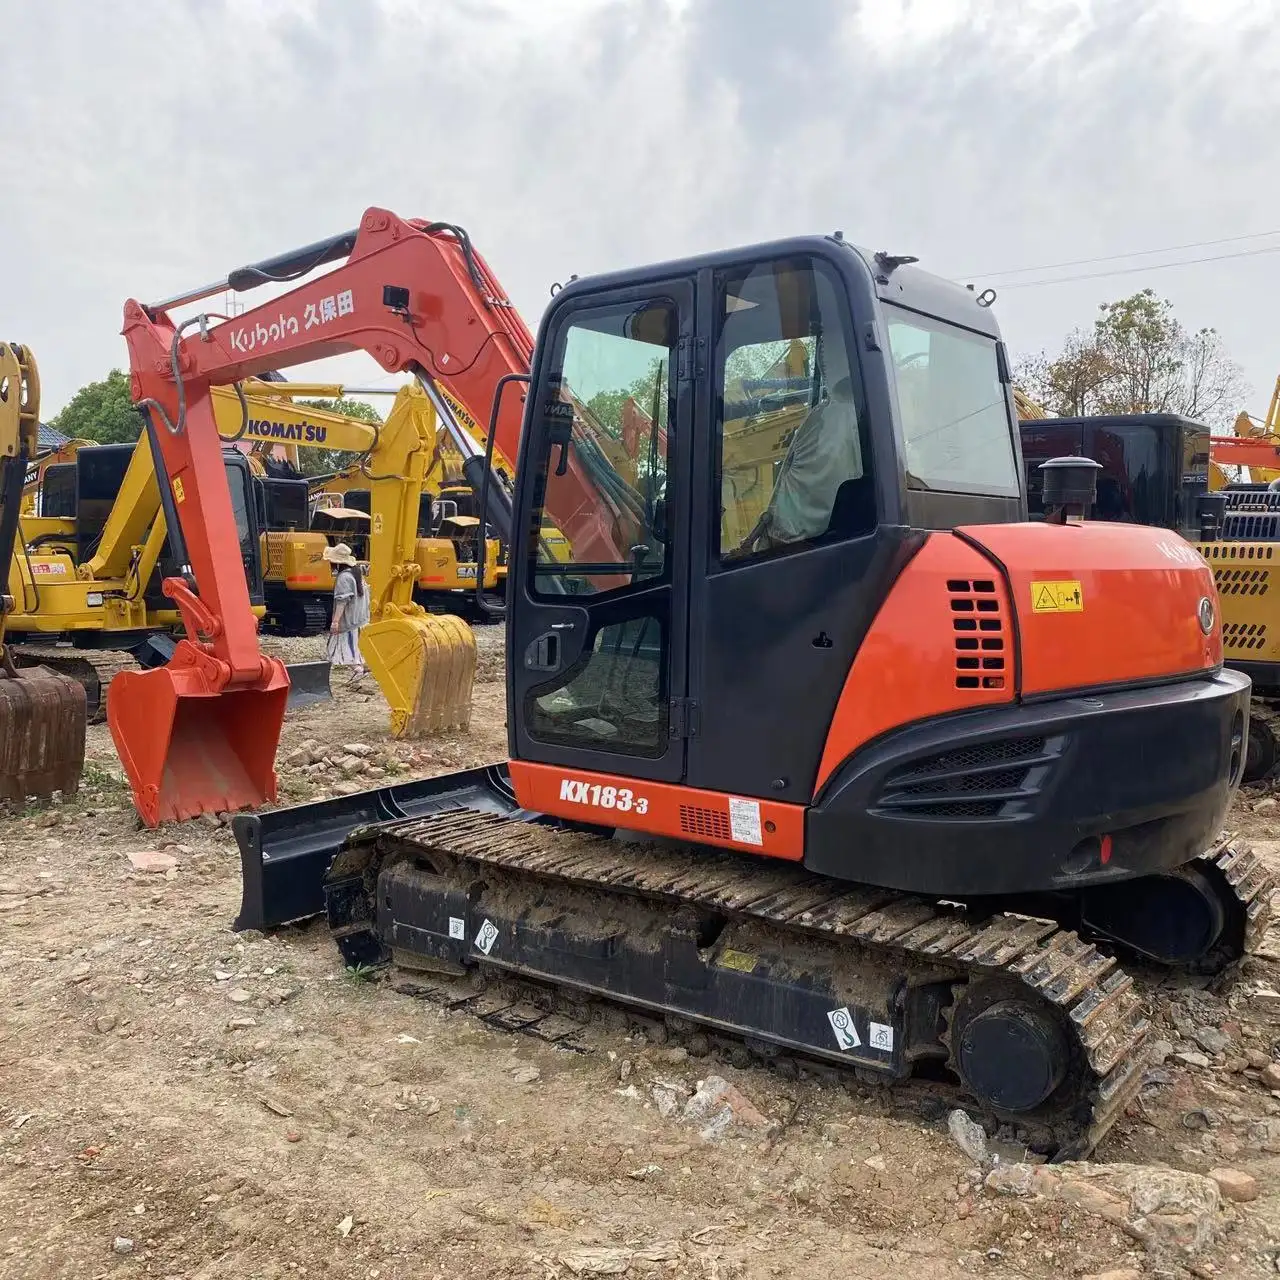 Mini used Kubota KX183-3 hydraulic tracked excavator for sale second-hand Kubota KX183-3 excavator